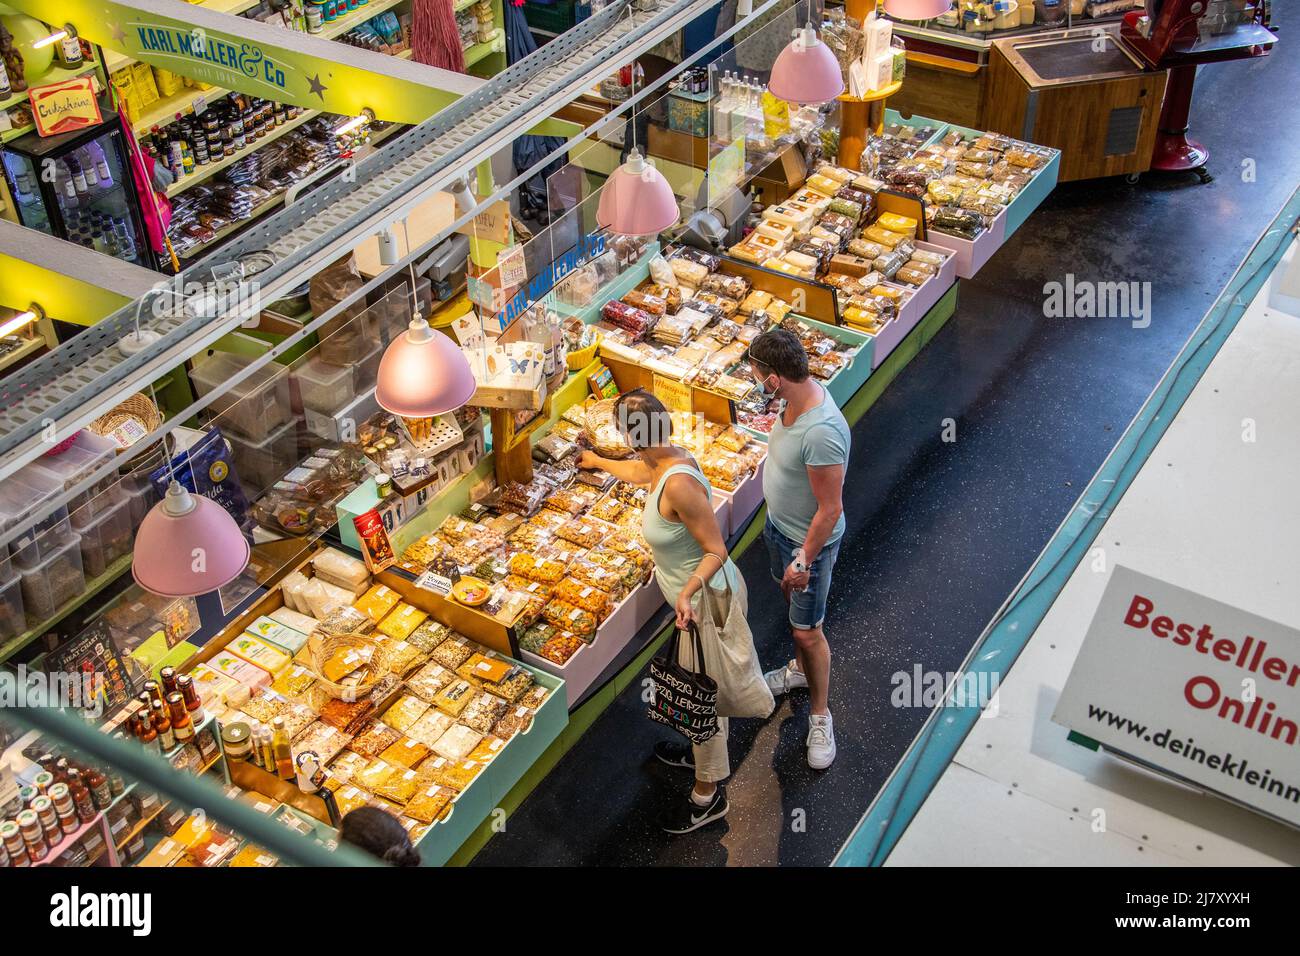 Acquisto di noci a Kleinmarkthalle, mercato indoor, Francoforte, Germania Foto Stock